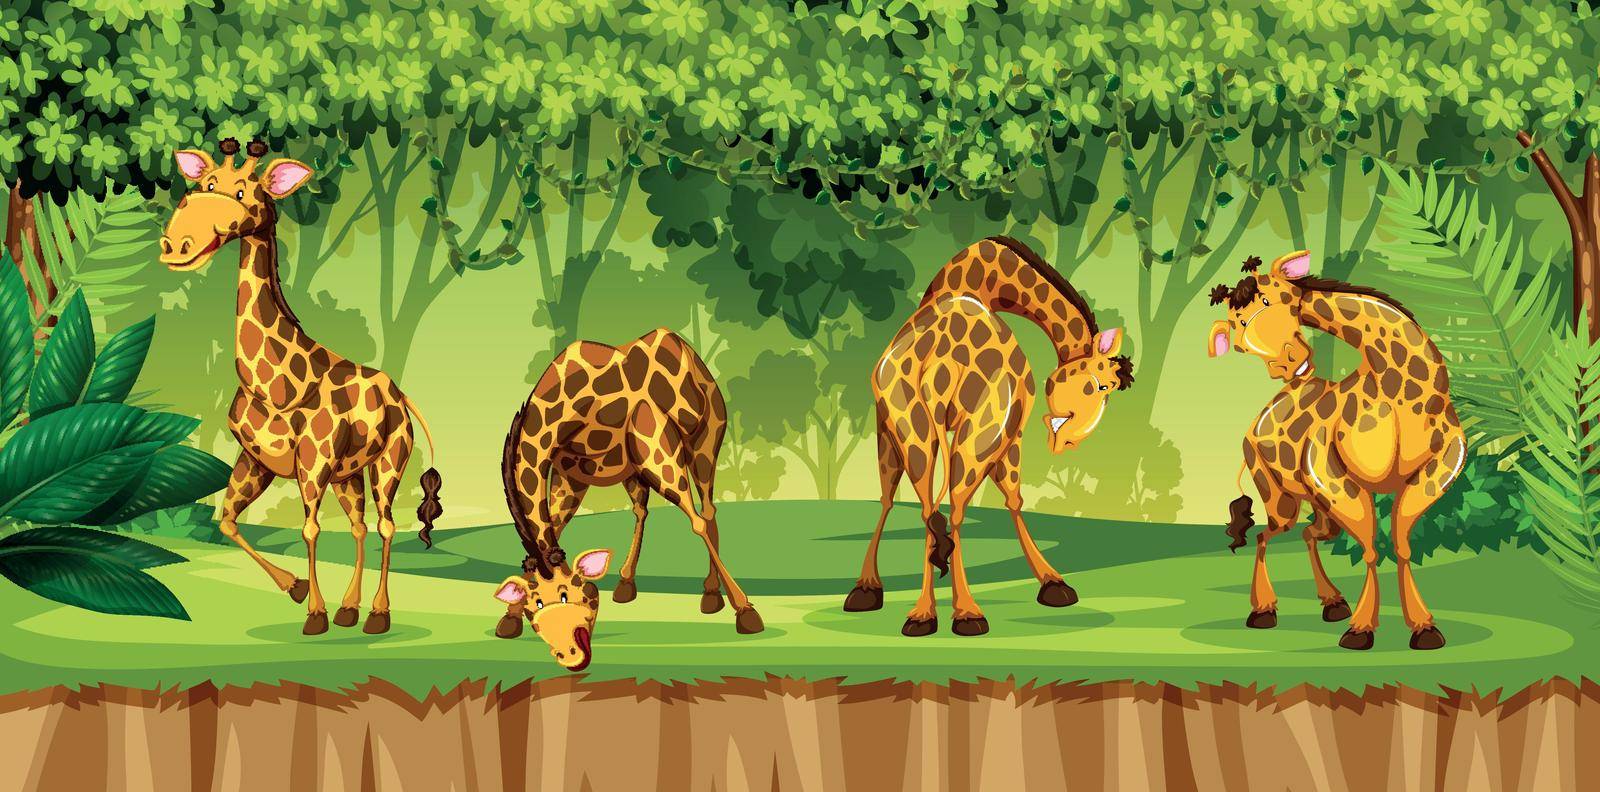 Giraffe in the jungle illustration